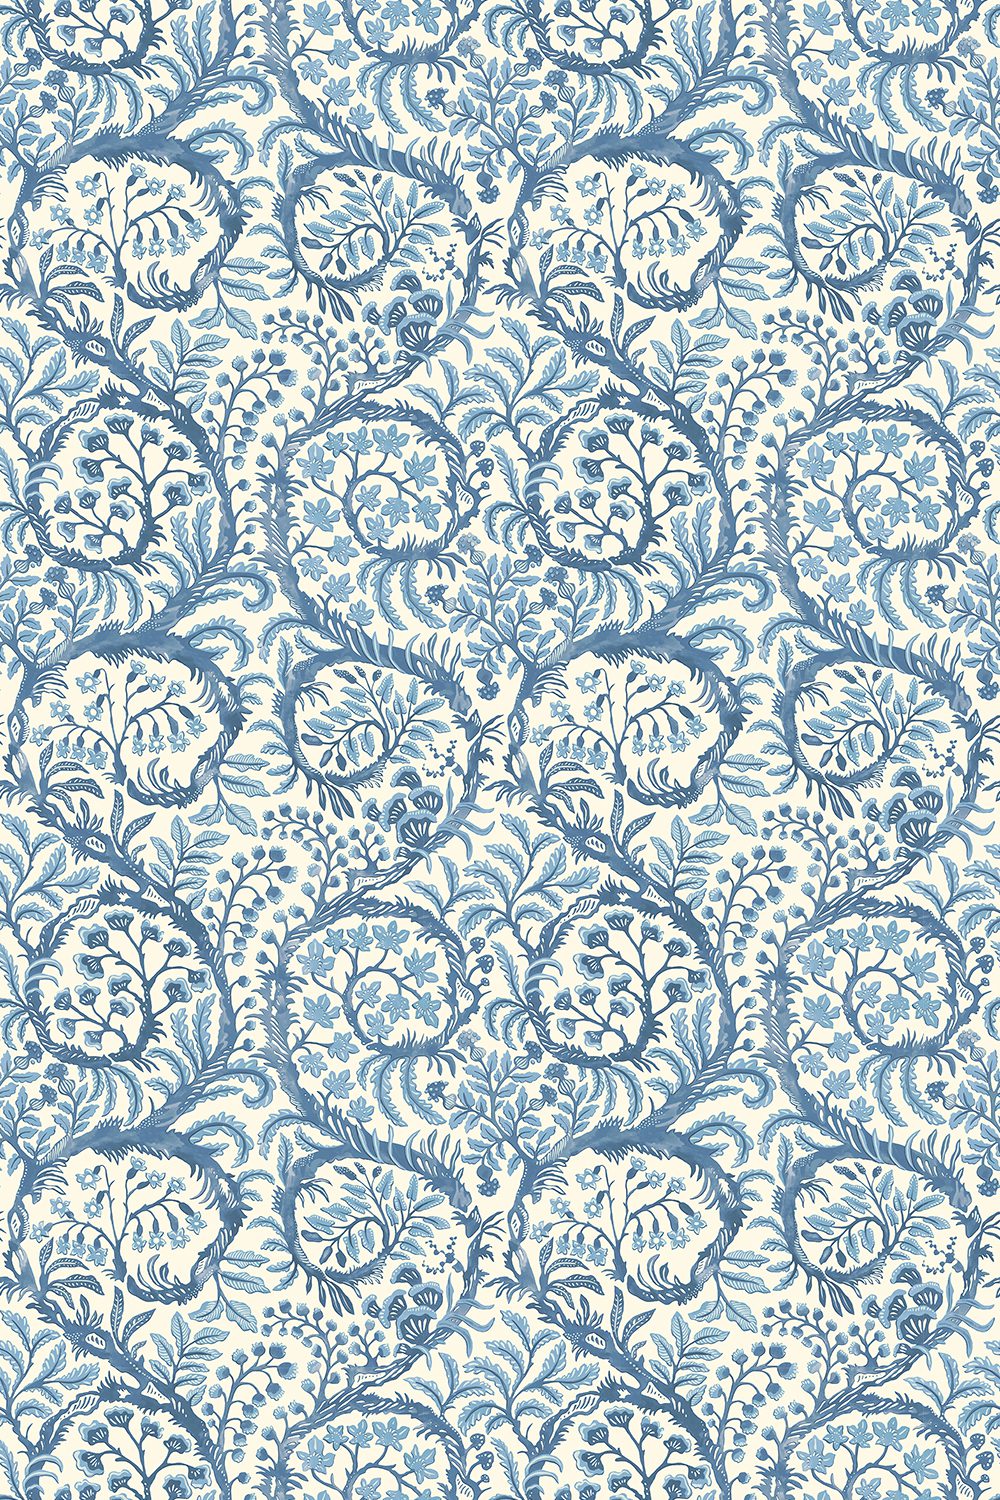 Butterrow Wallpaper in Bright Blue & White